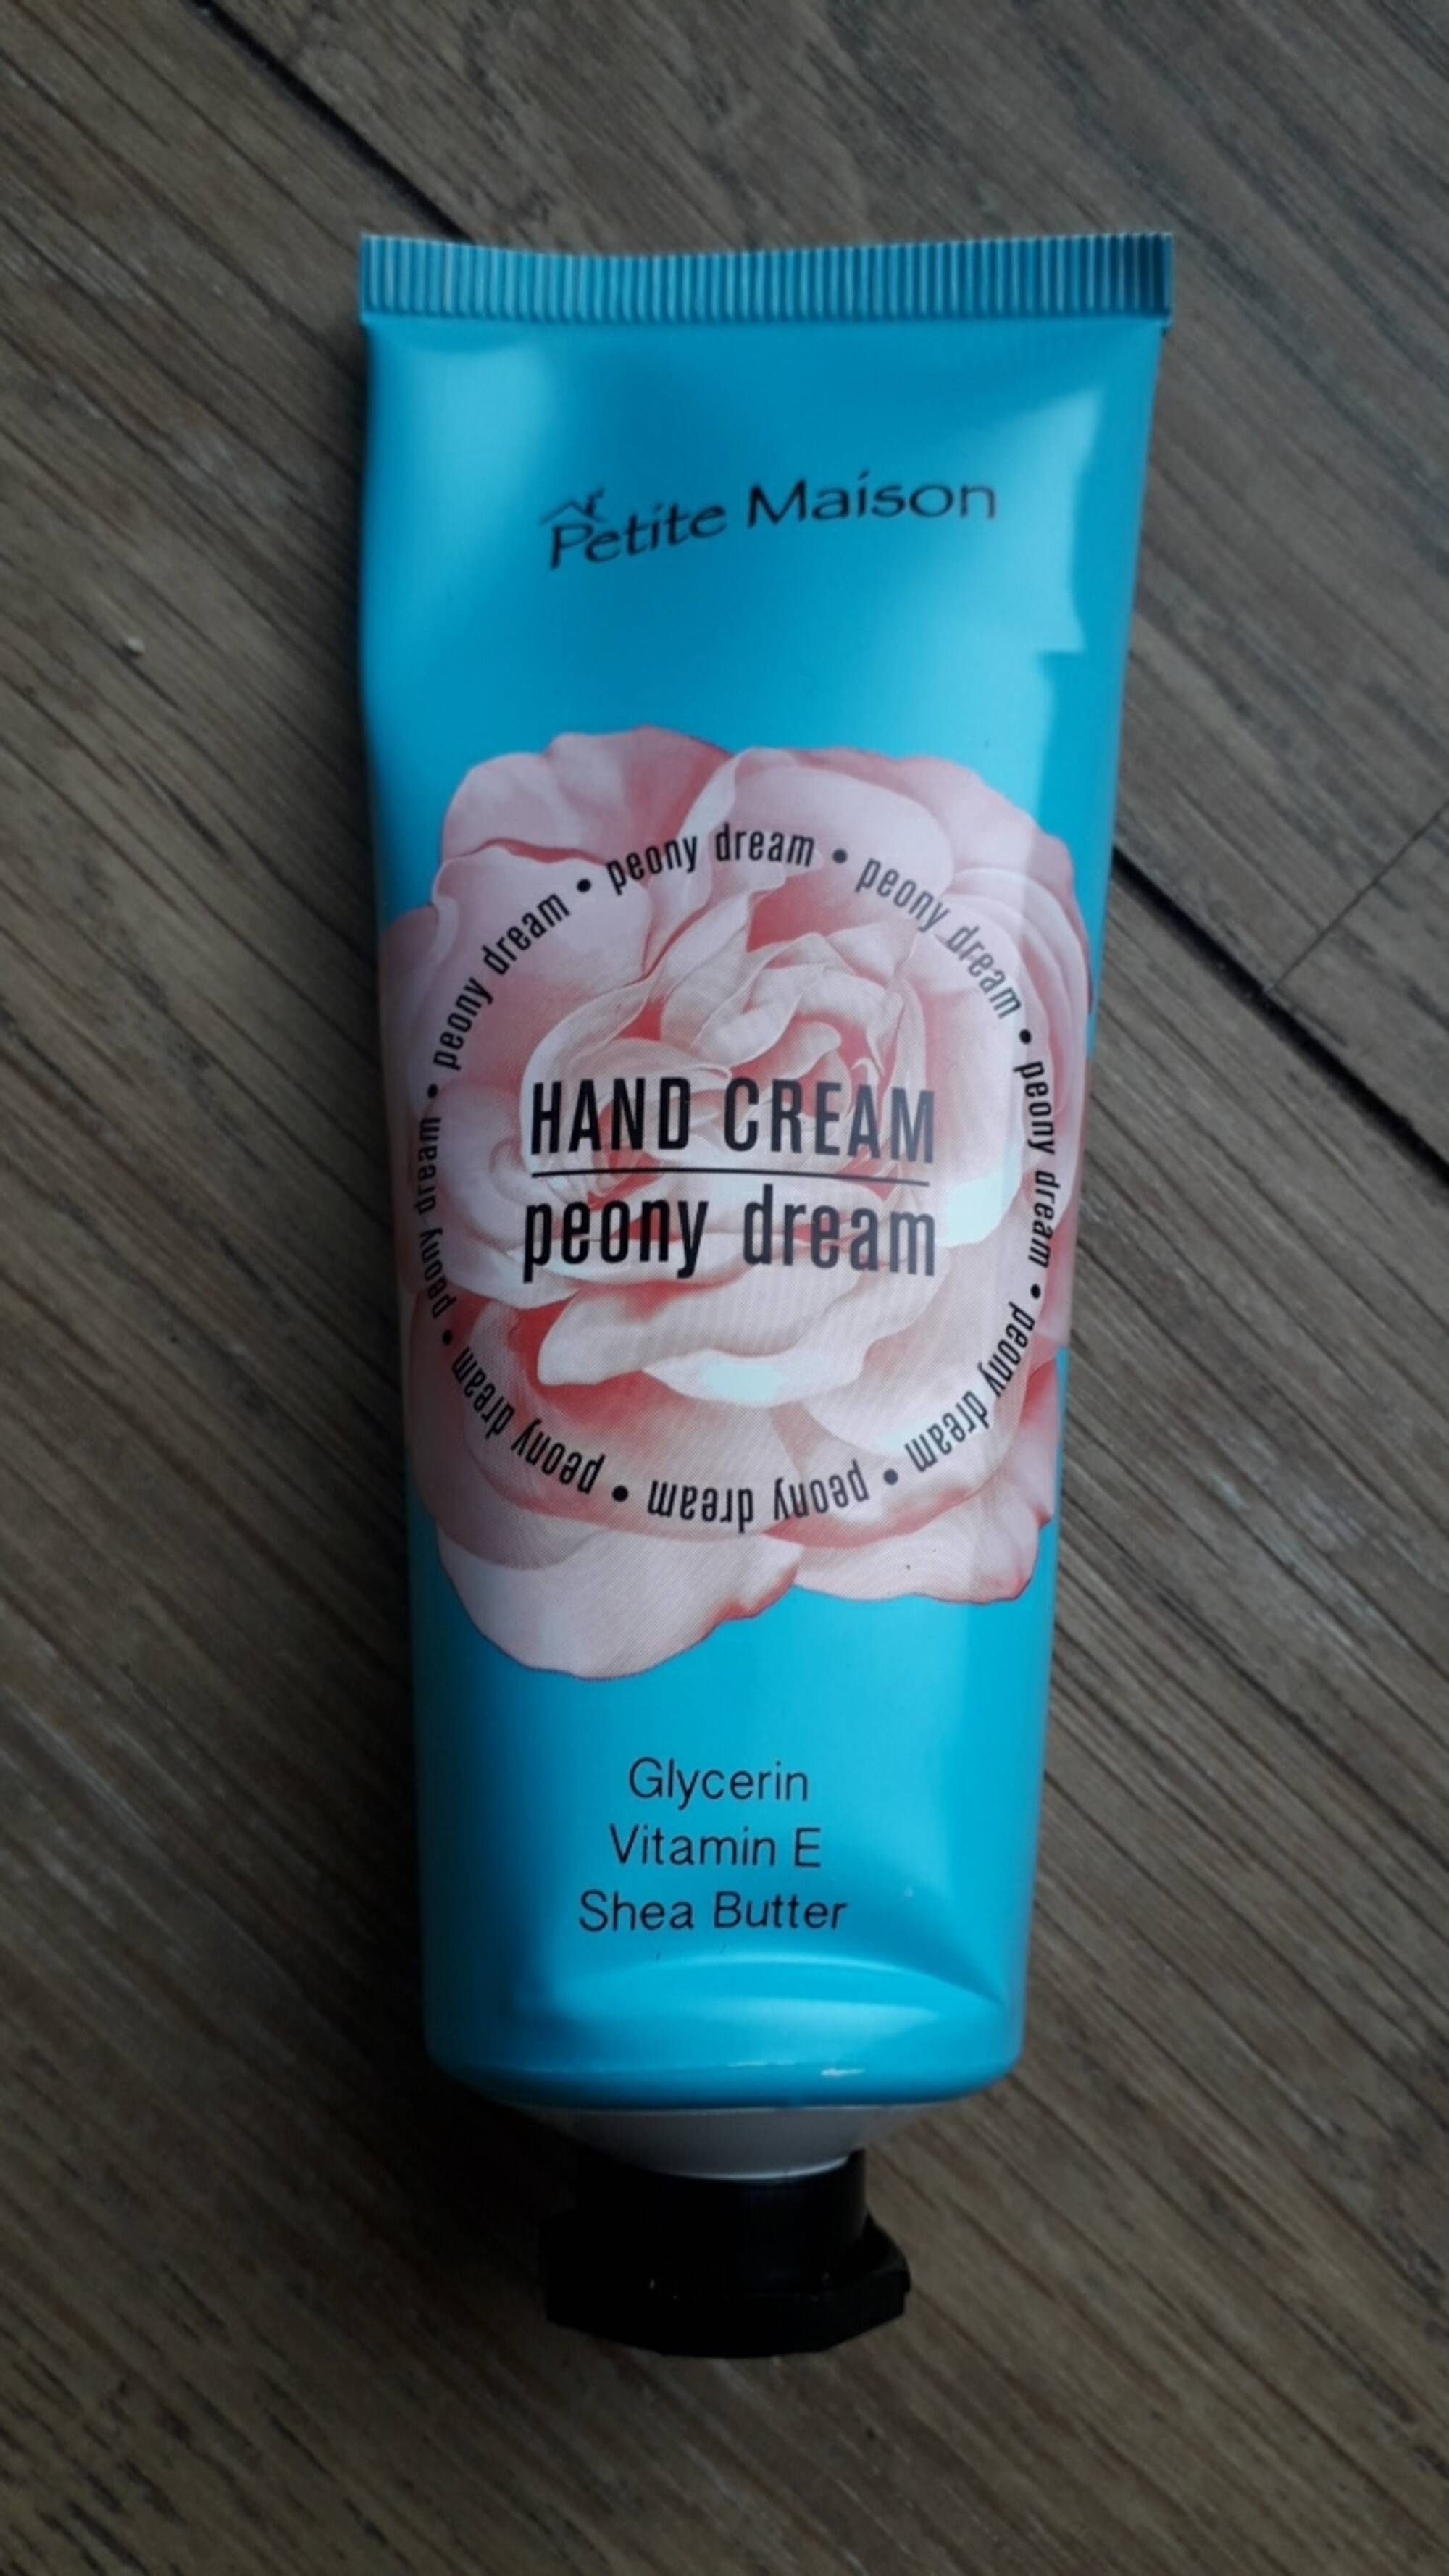 PETITE MAISON - Peony dream - Hand cream